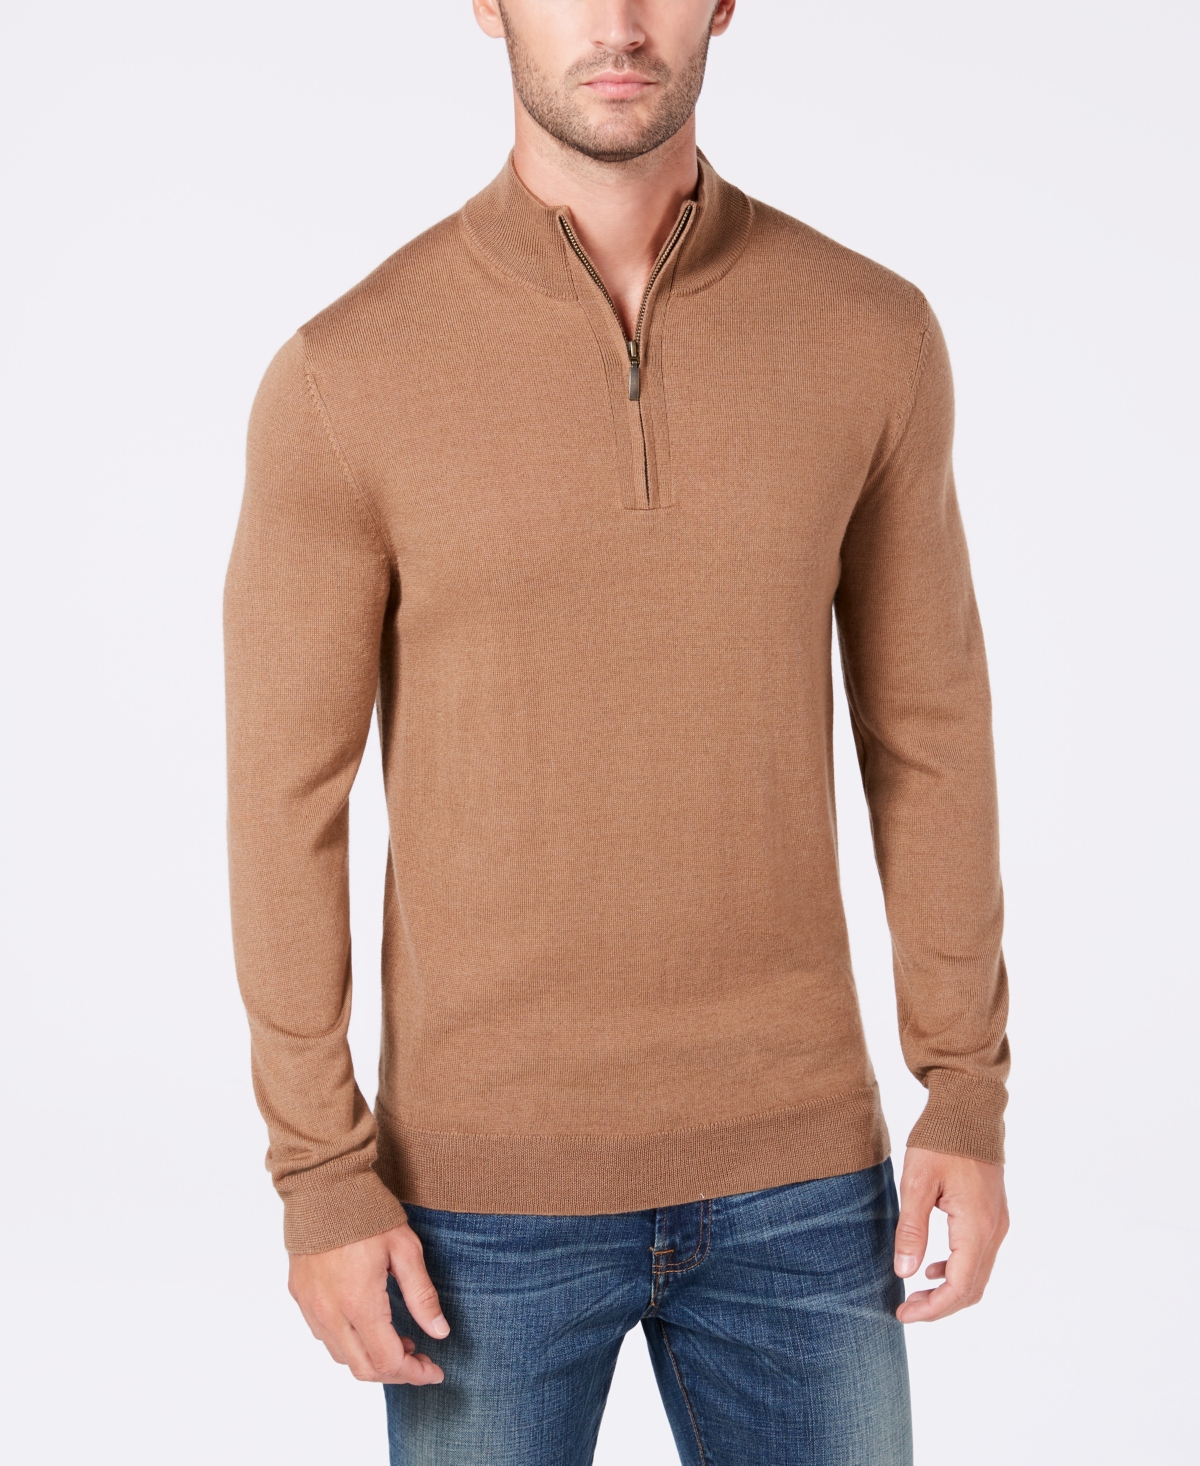 Men's Quarter-Zip Merino Wool Blend Sweater, Created for Macy's - Navy Blue